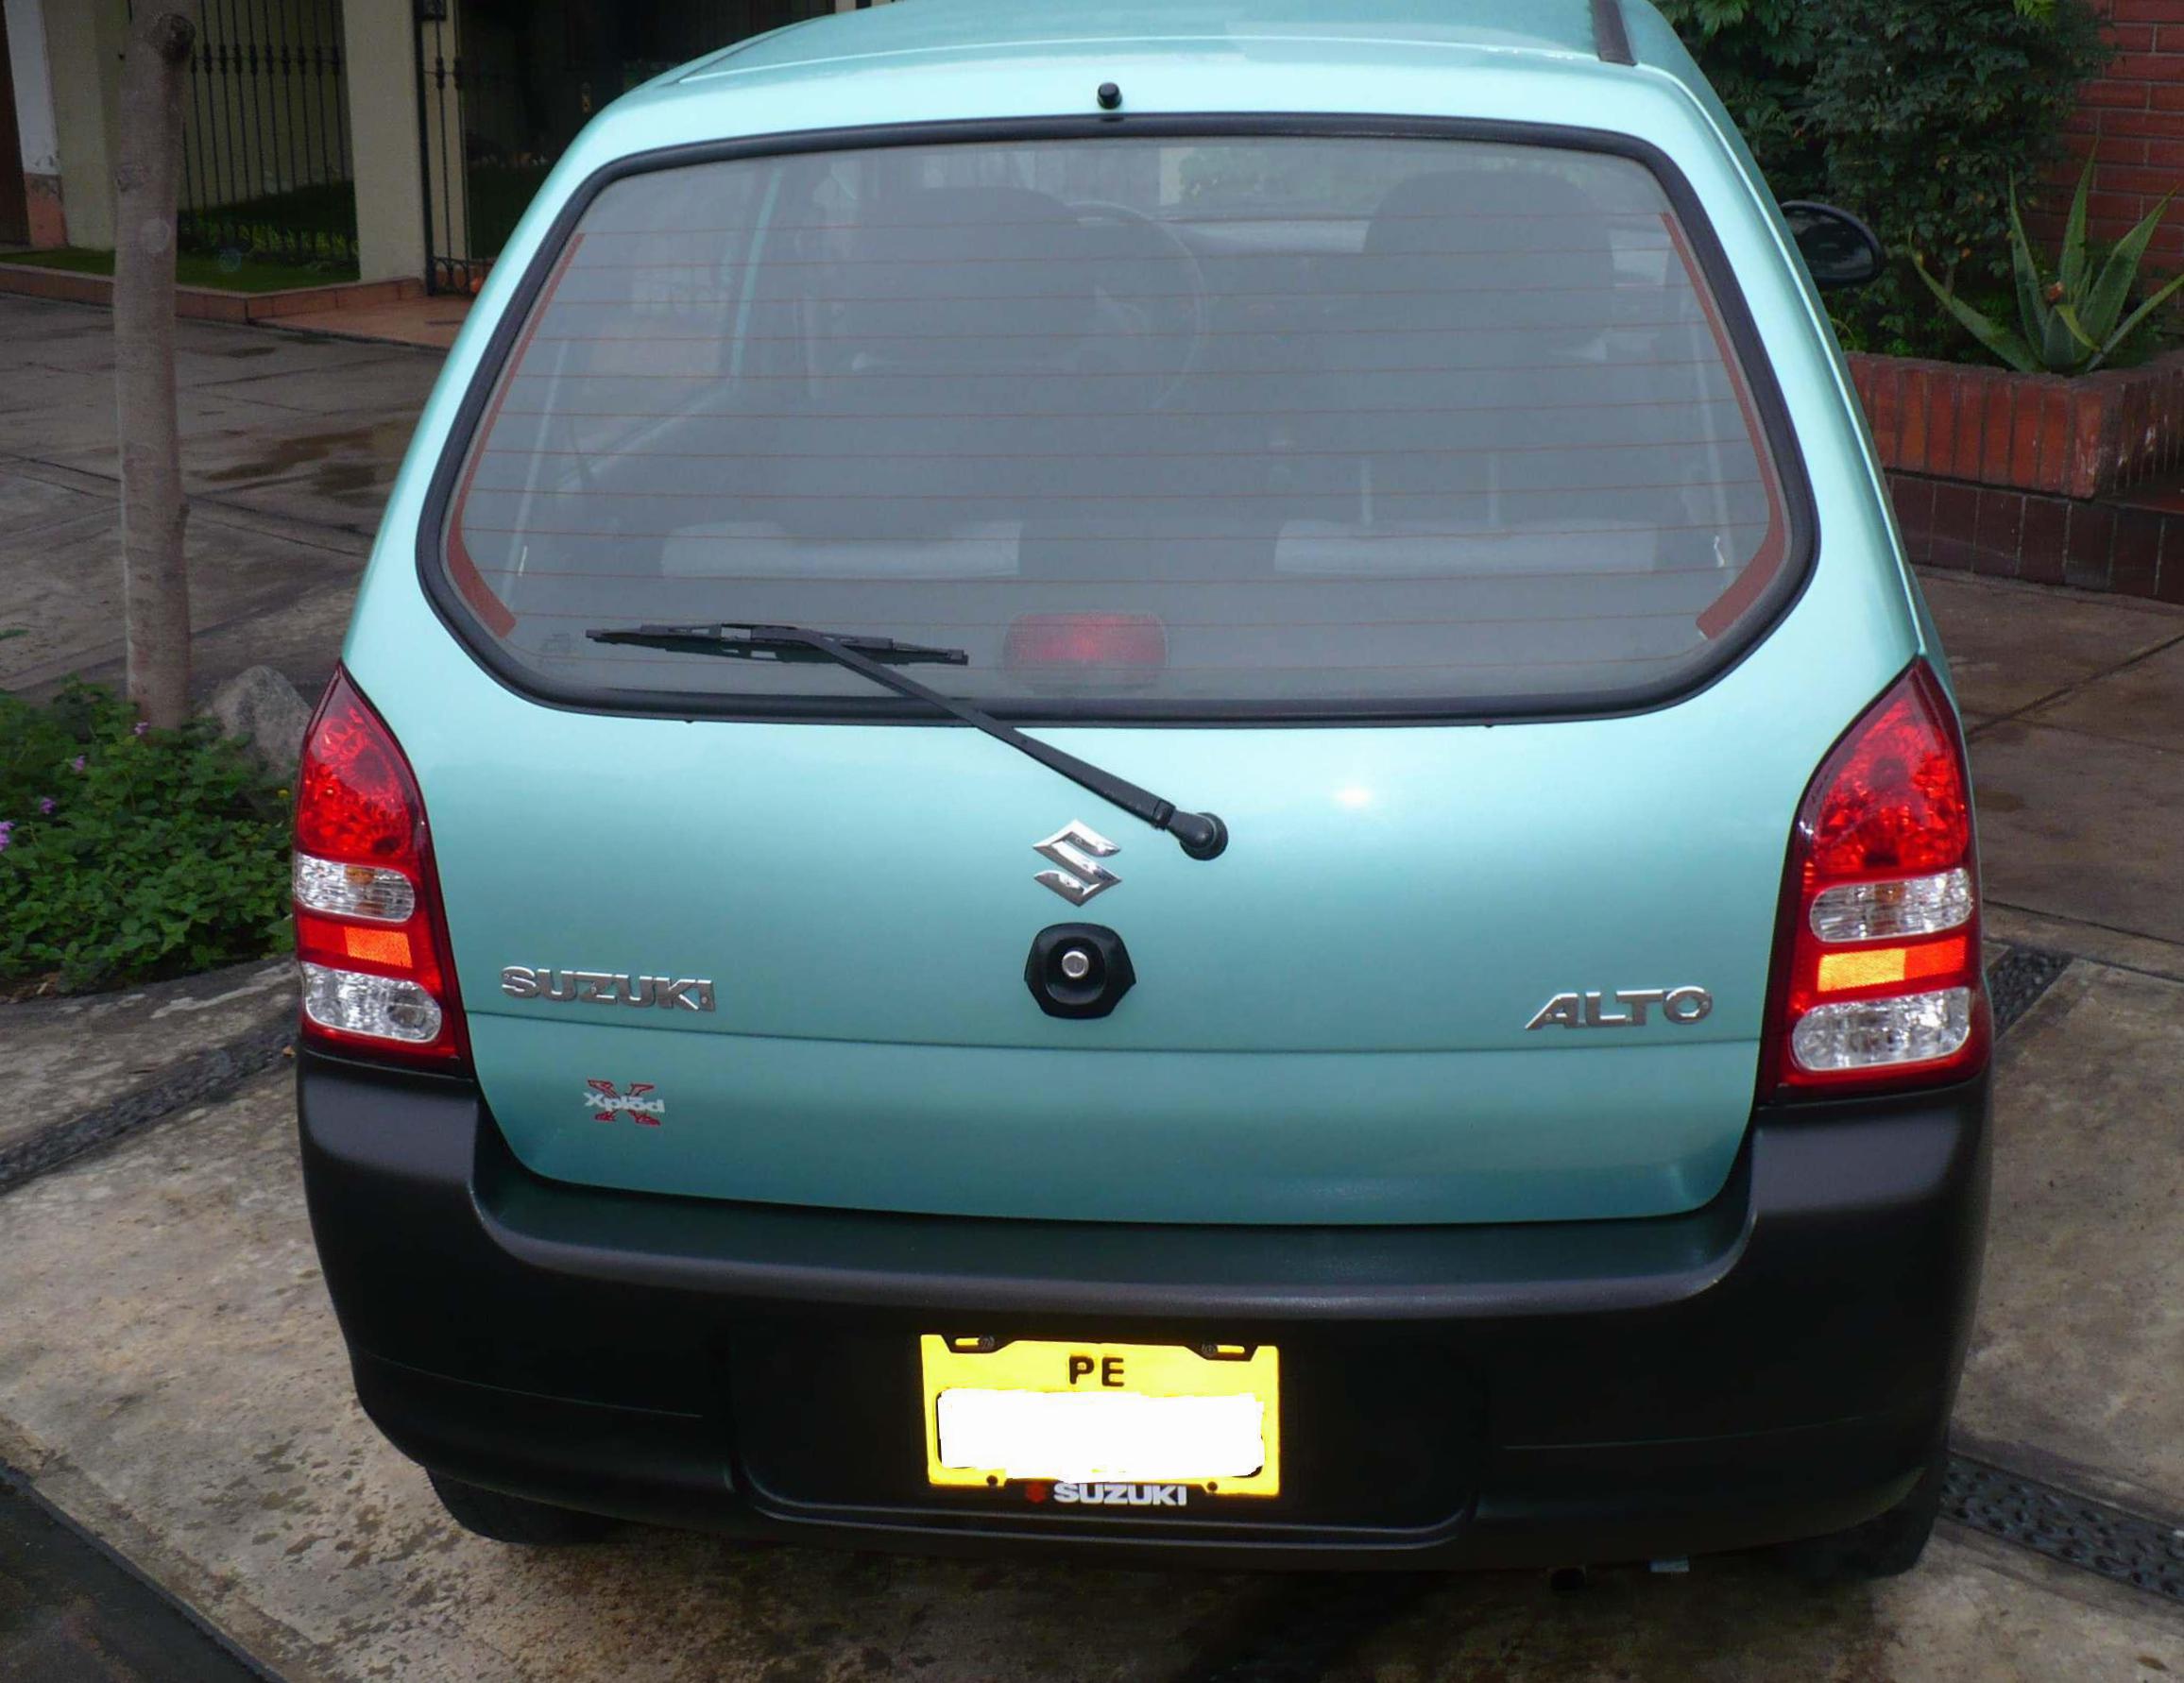 Alto Suzuki spec 2010